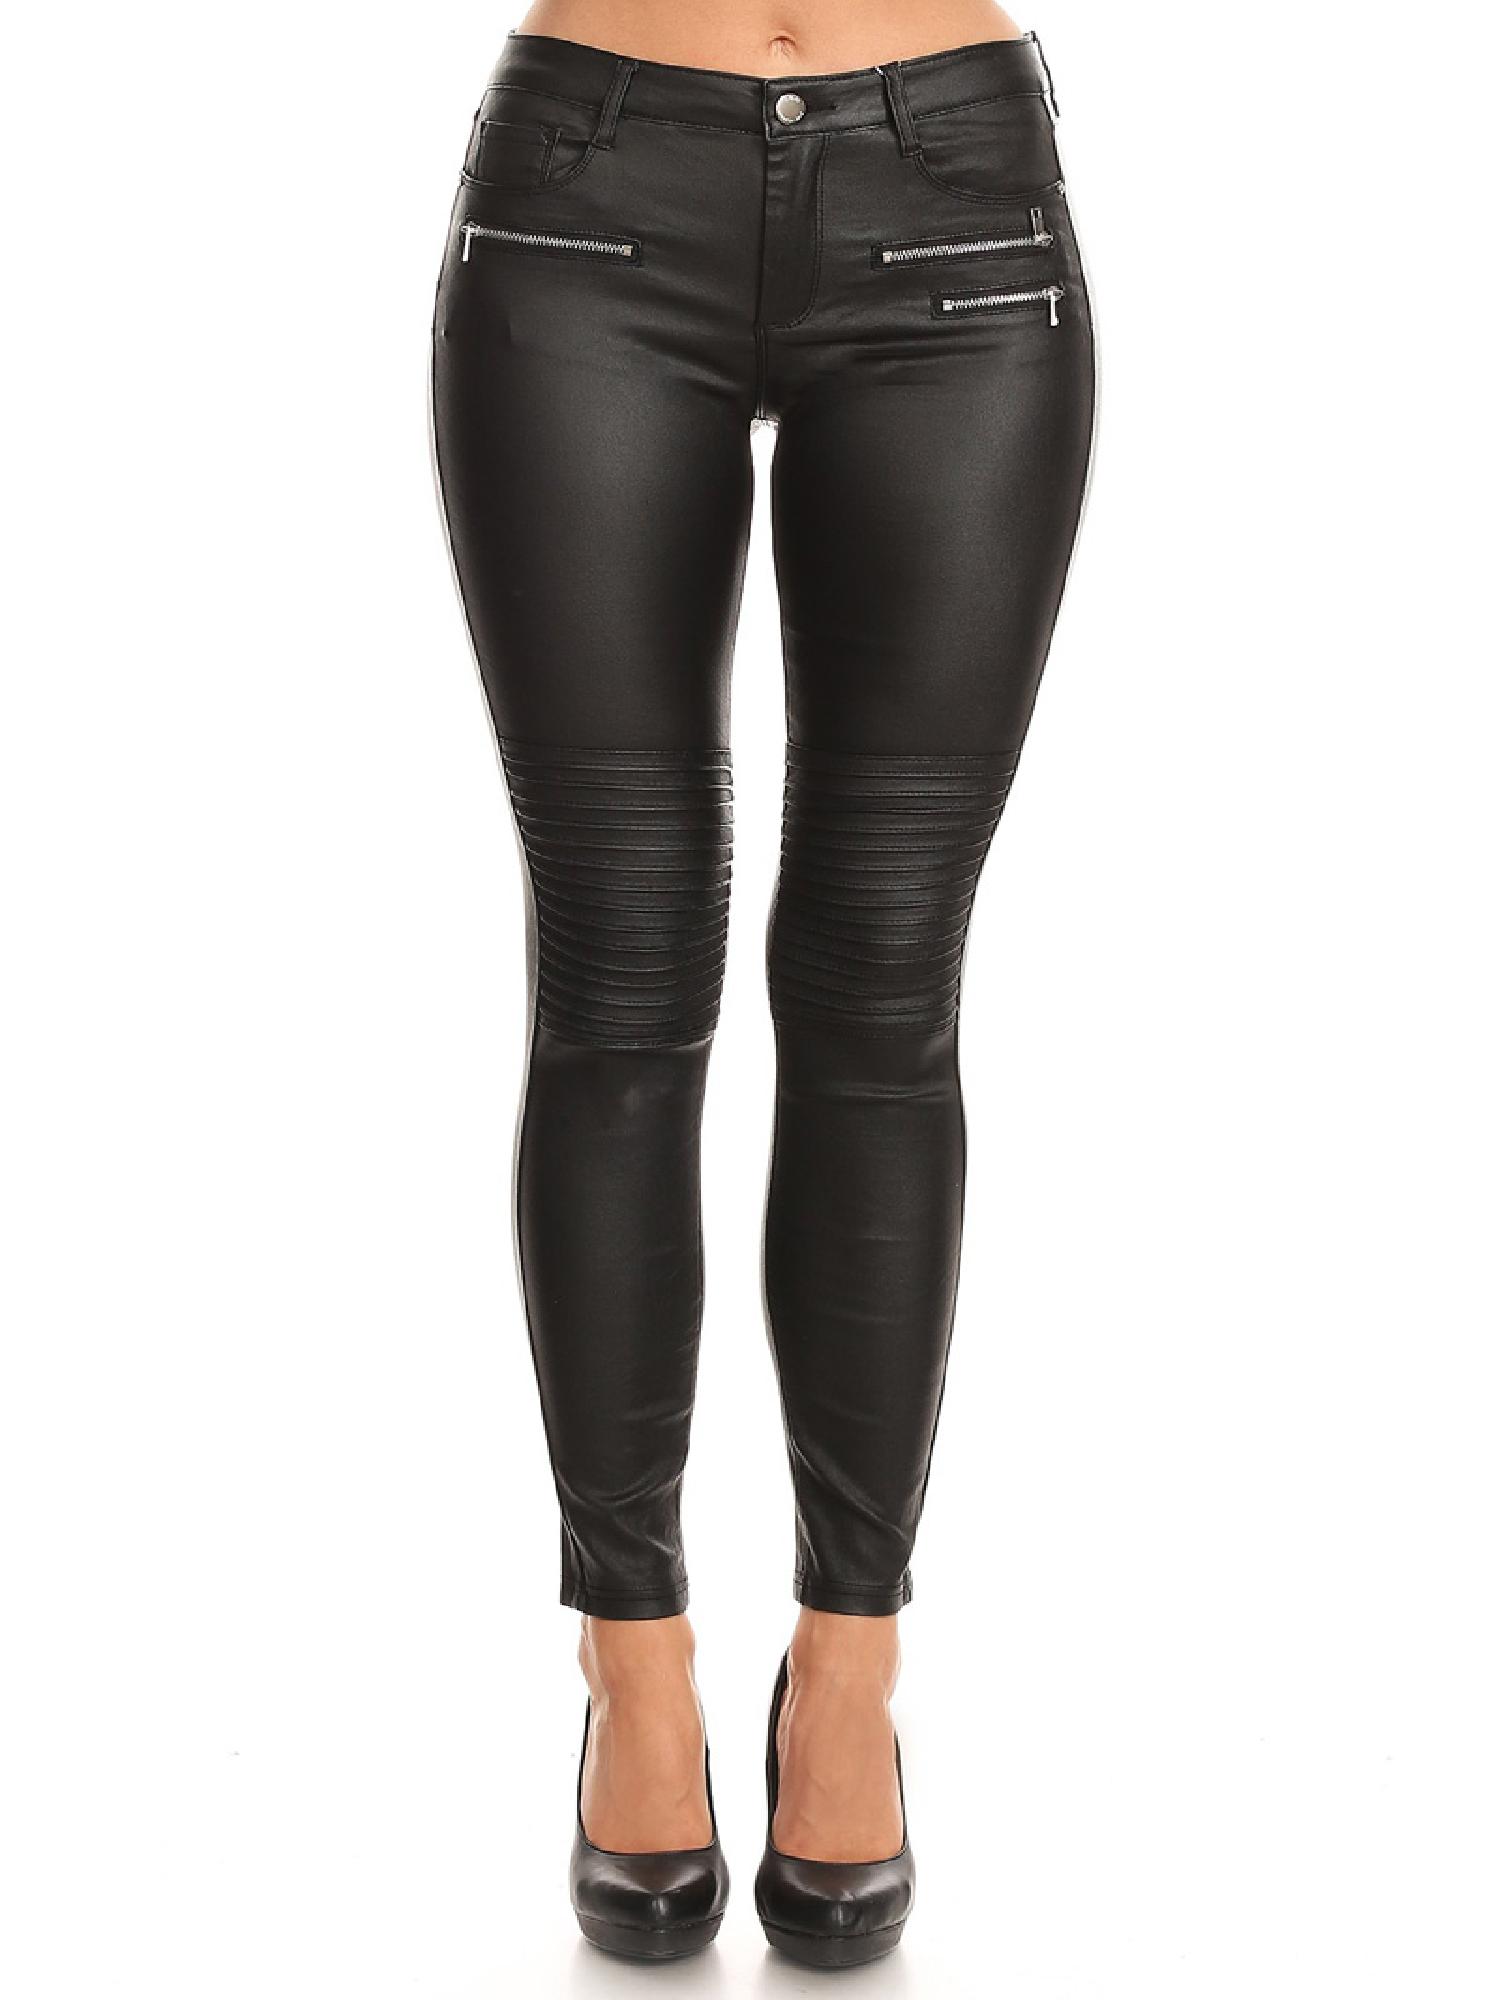 womens faux leather leggings zipper system